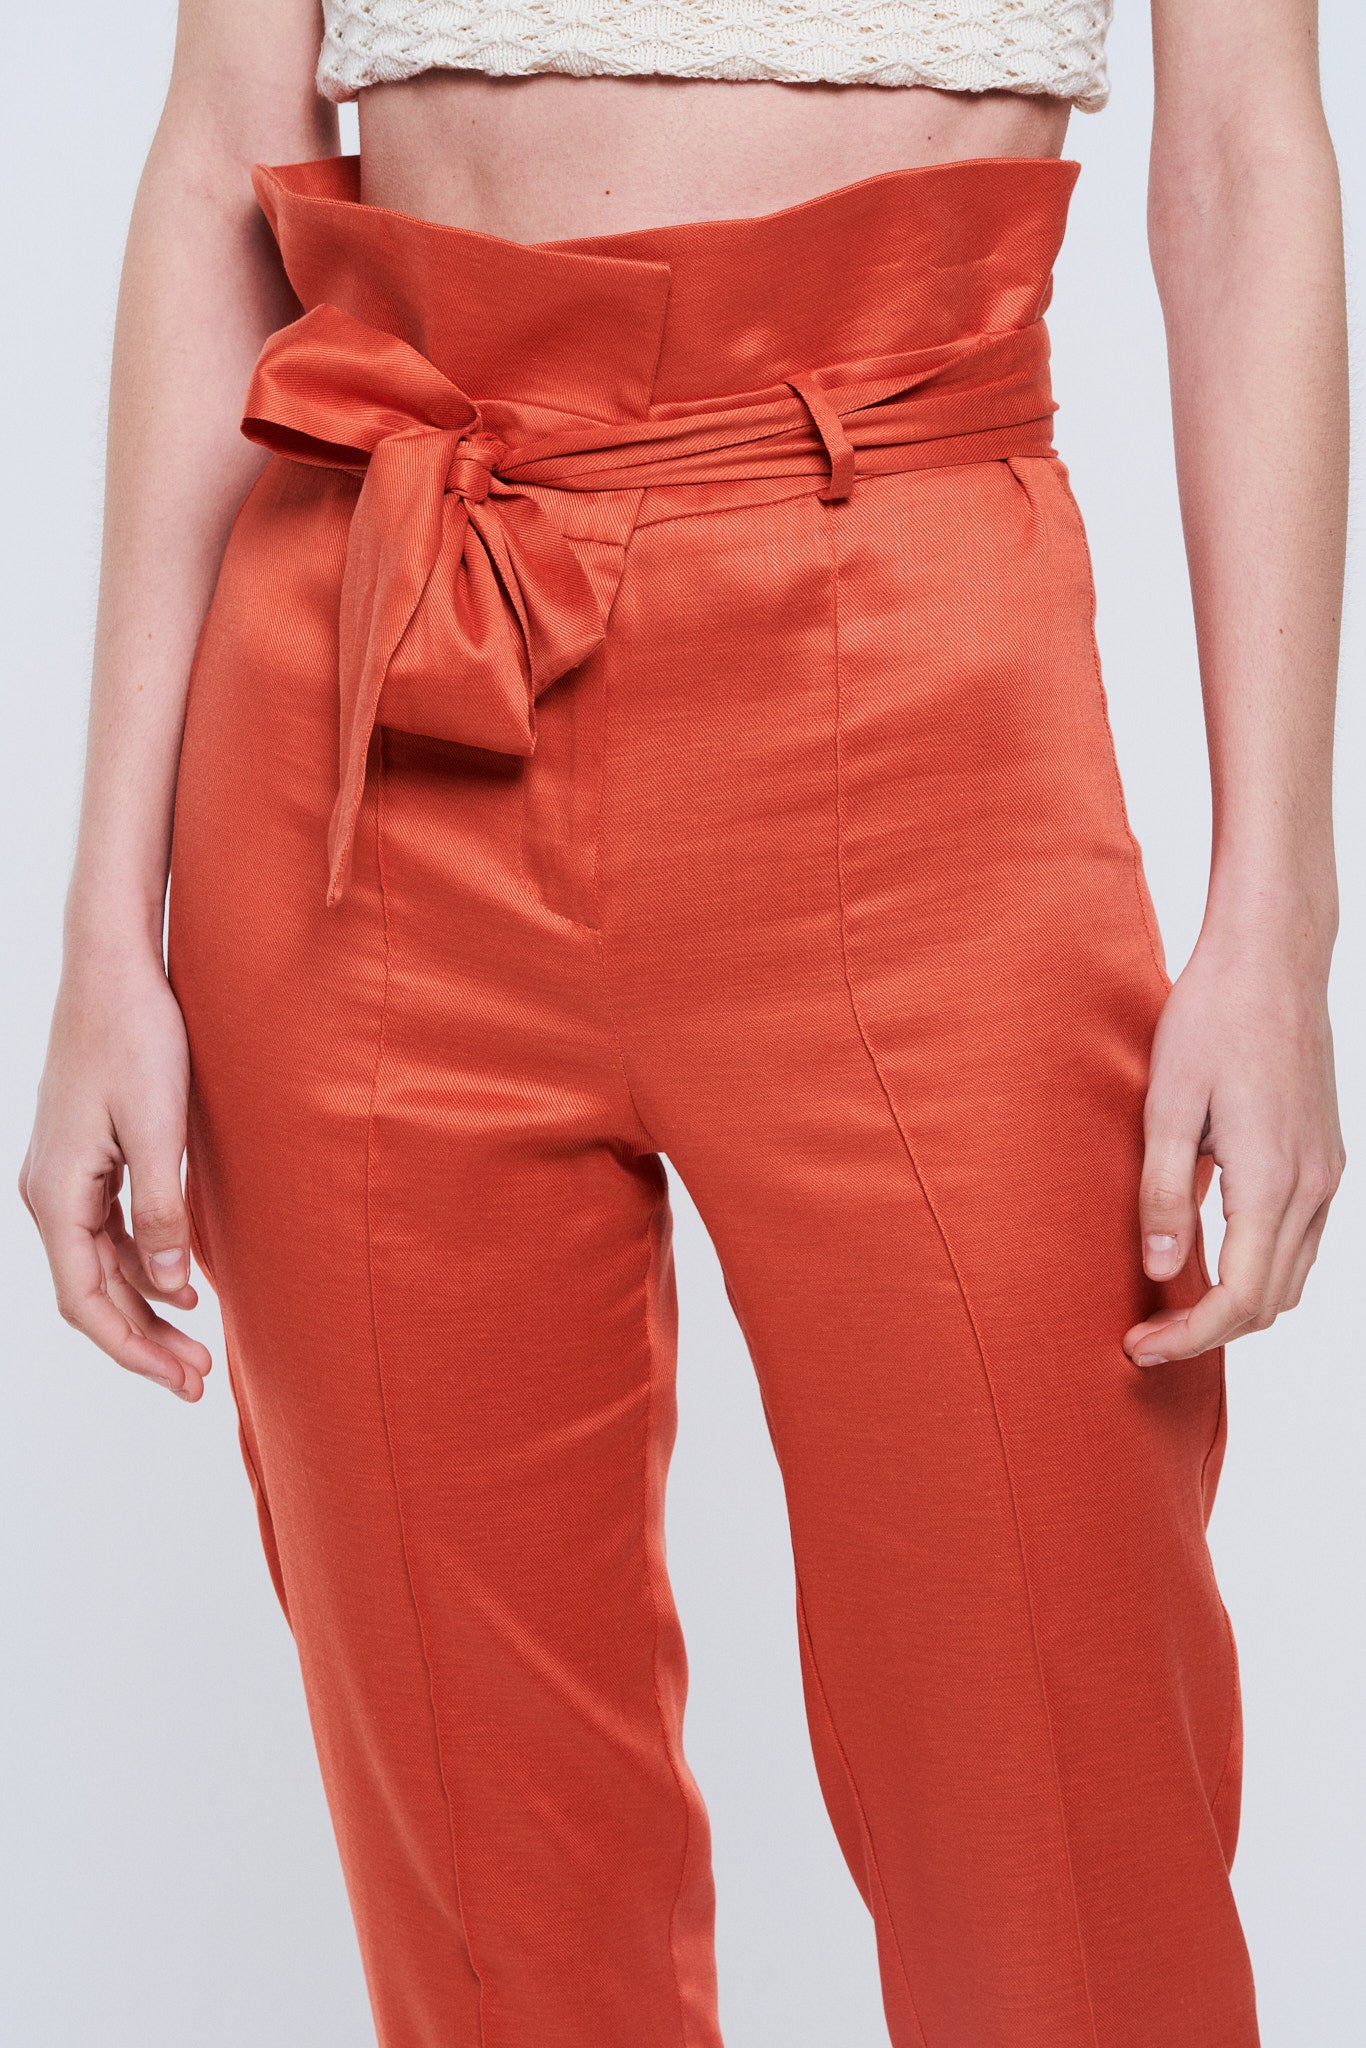 Pantalon avec noeud orange